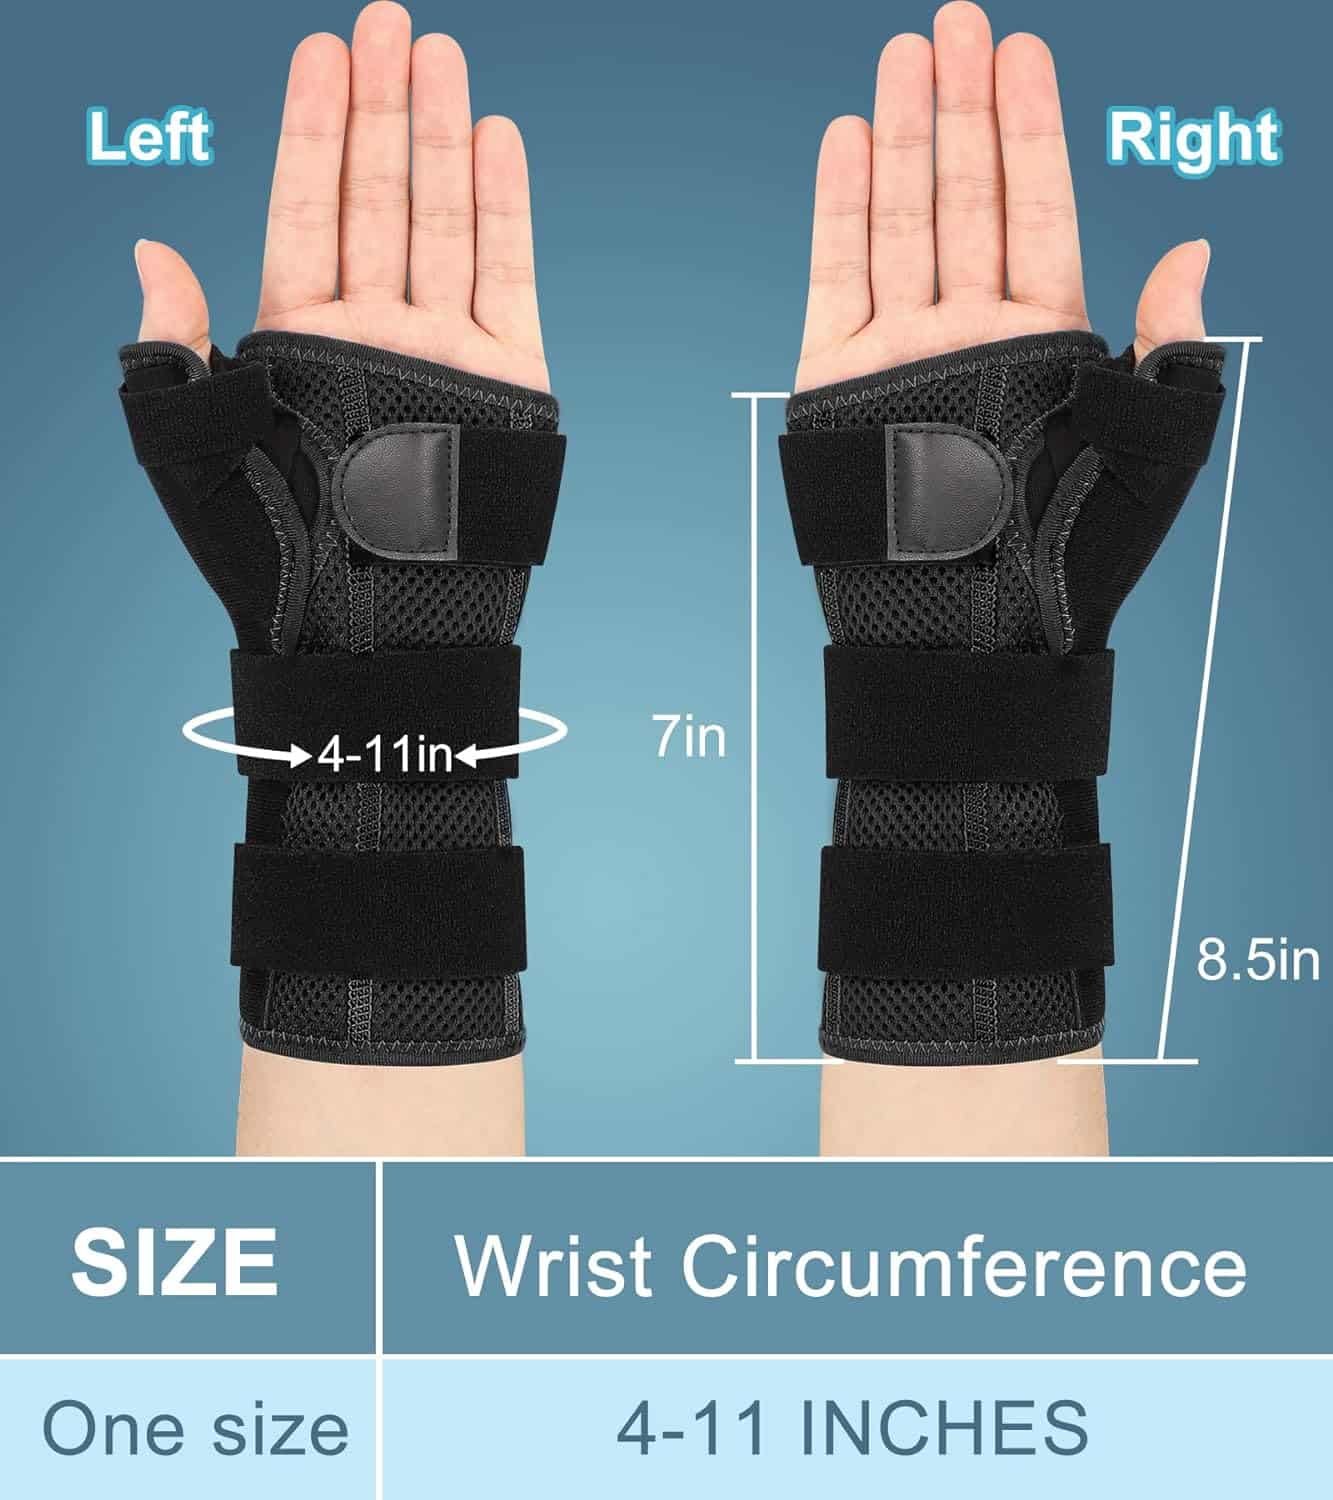 Velpeau Wrist Brace with Thumb Spica Splint Regular, Right Hand, Medium